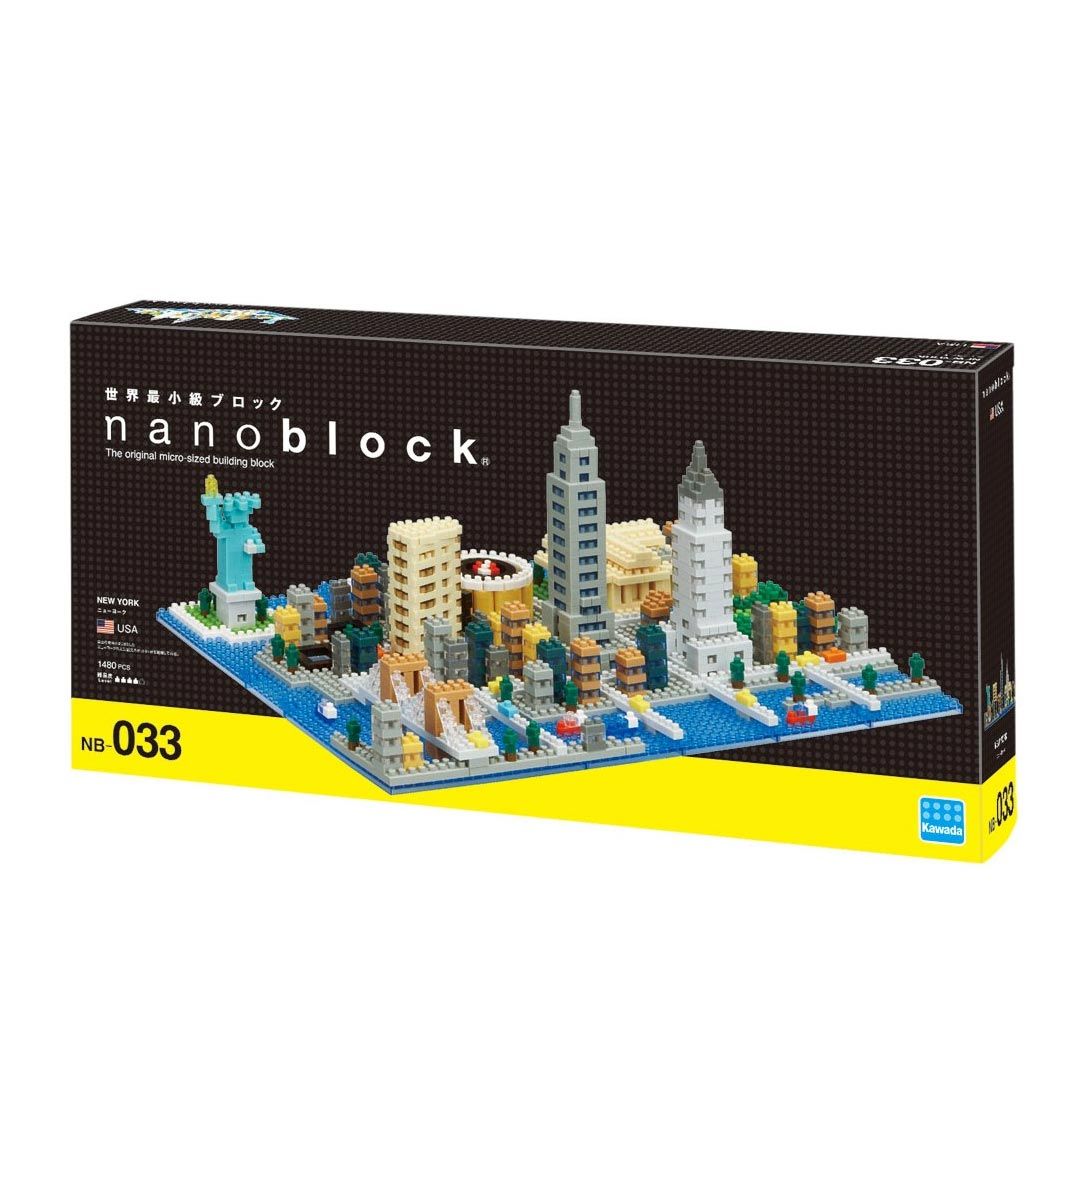 Nanoblock - New York - NB 033